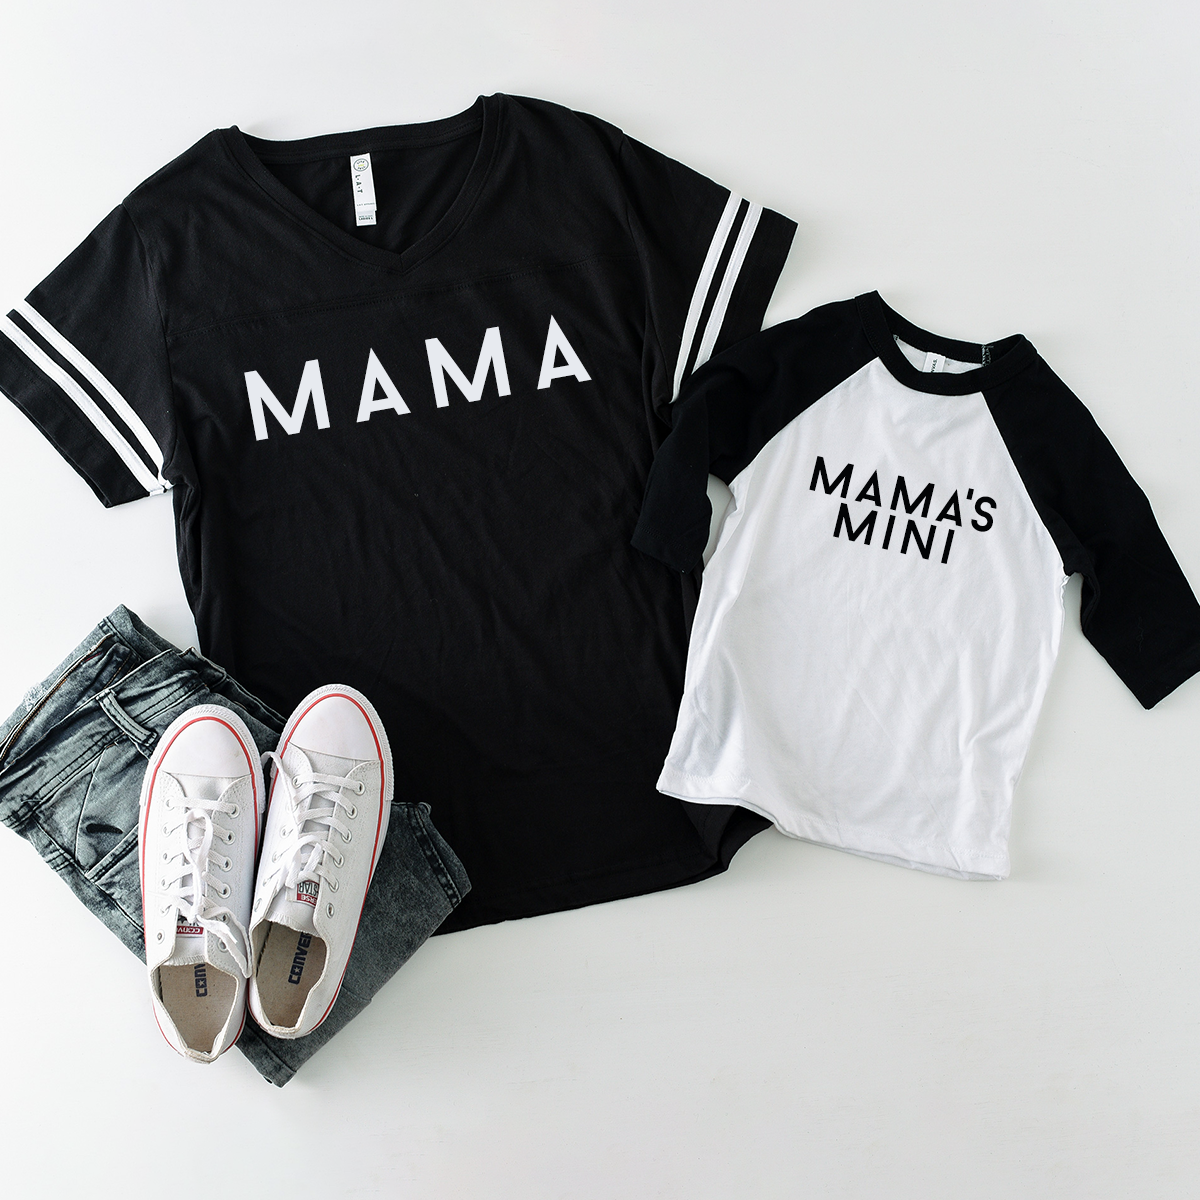 Mama Mama's Mini - Baseball Twinning Set. Mum & Sons/Daughters